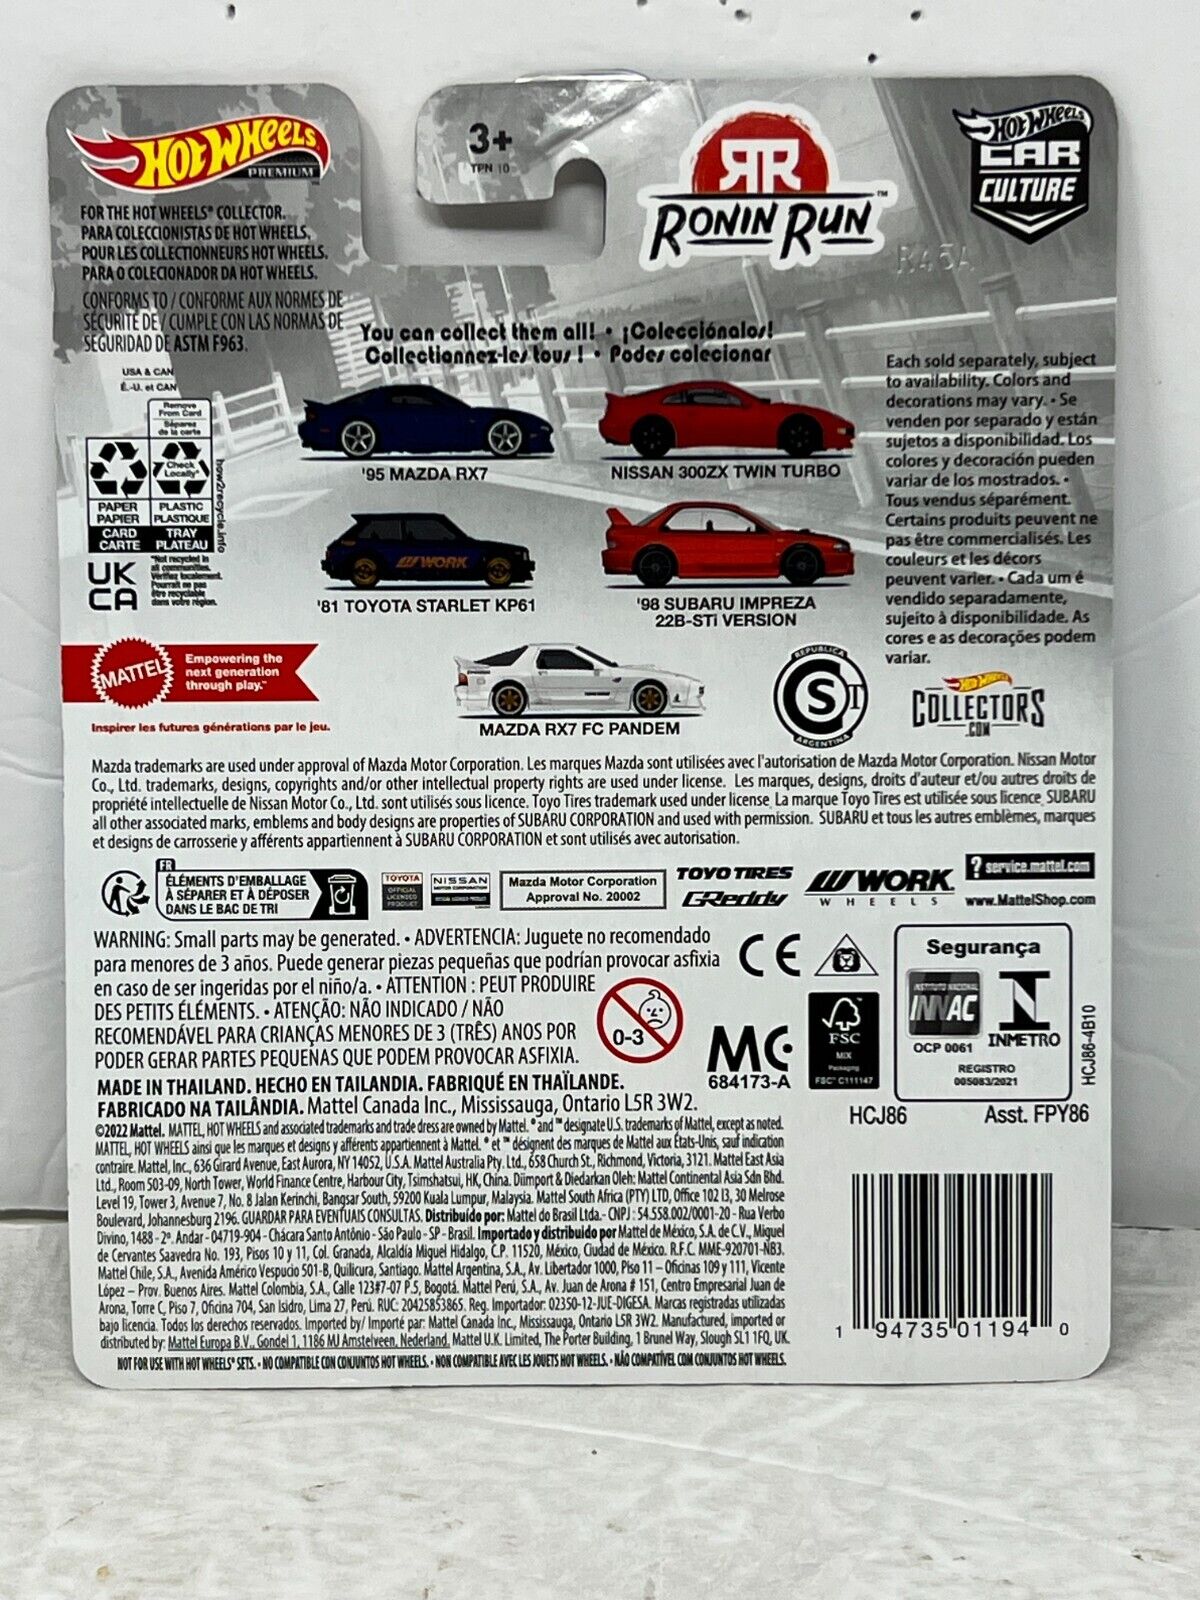 Hot Wheels Premium Ronin Run Mazda Rx7 FC Pandem 1:64 Diecast